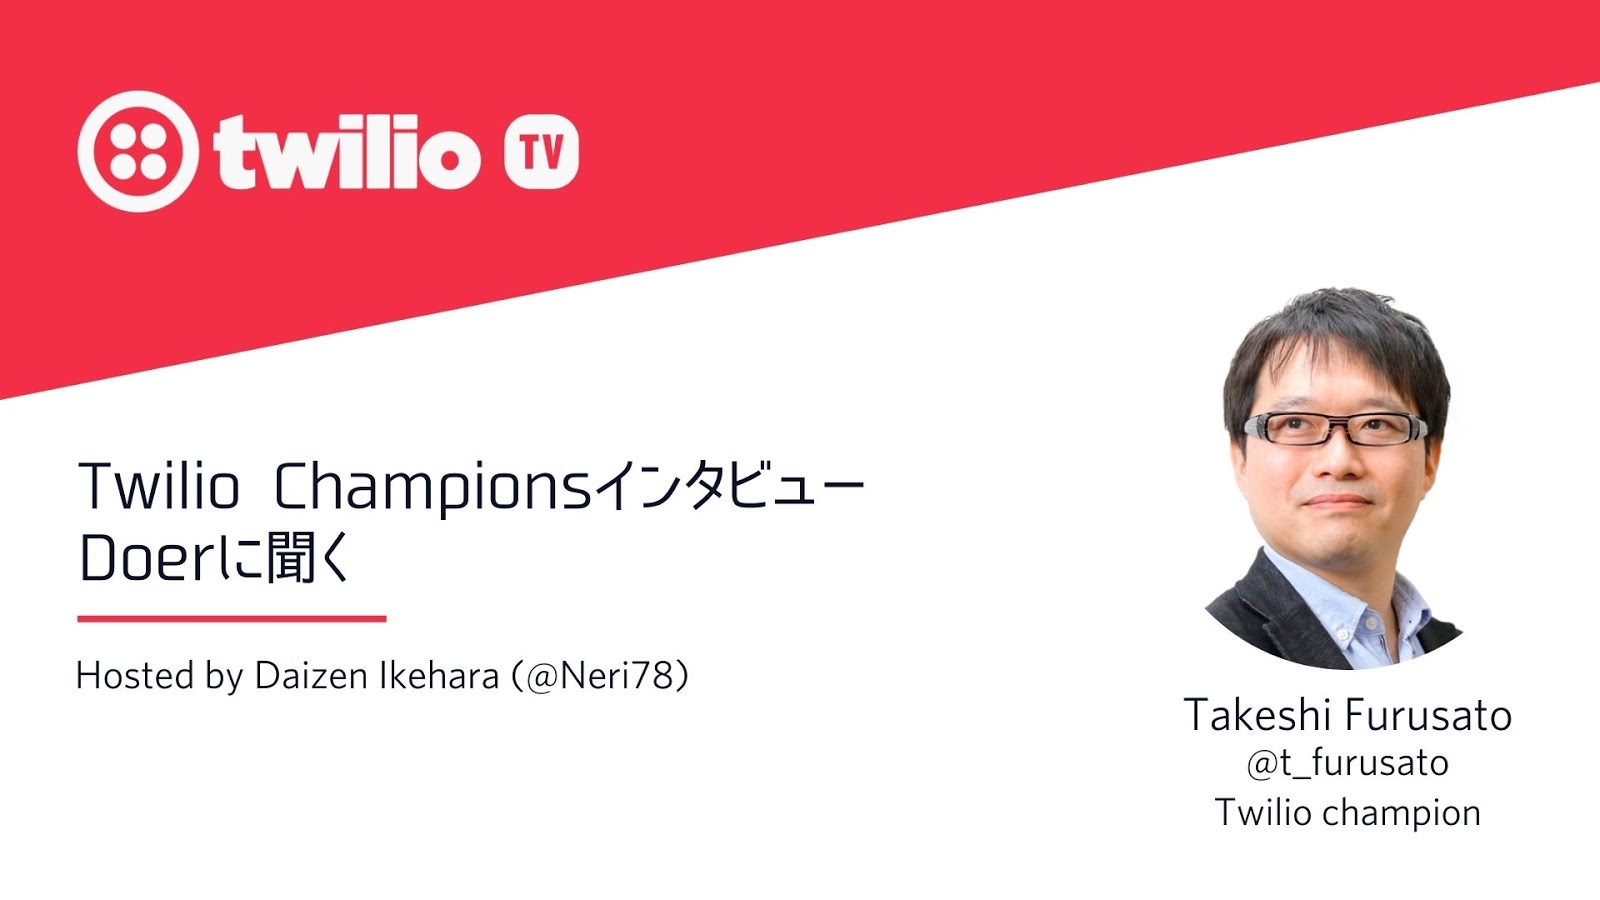 Twilio Champion - Takeshi Furusato